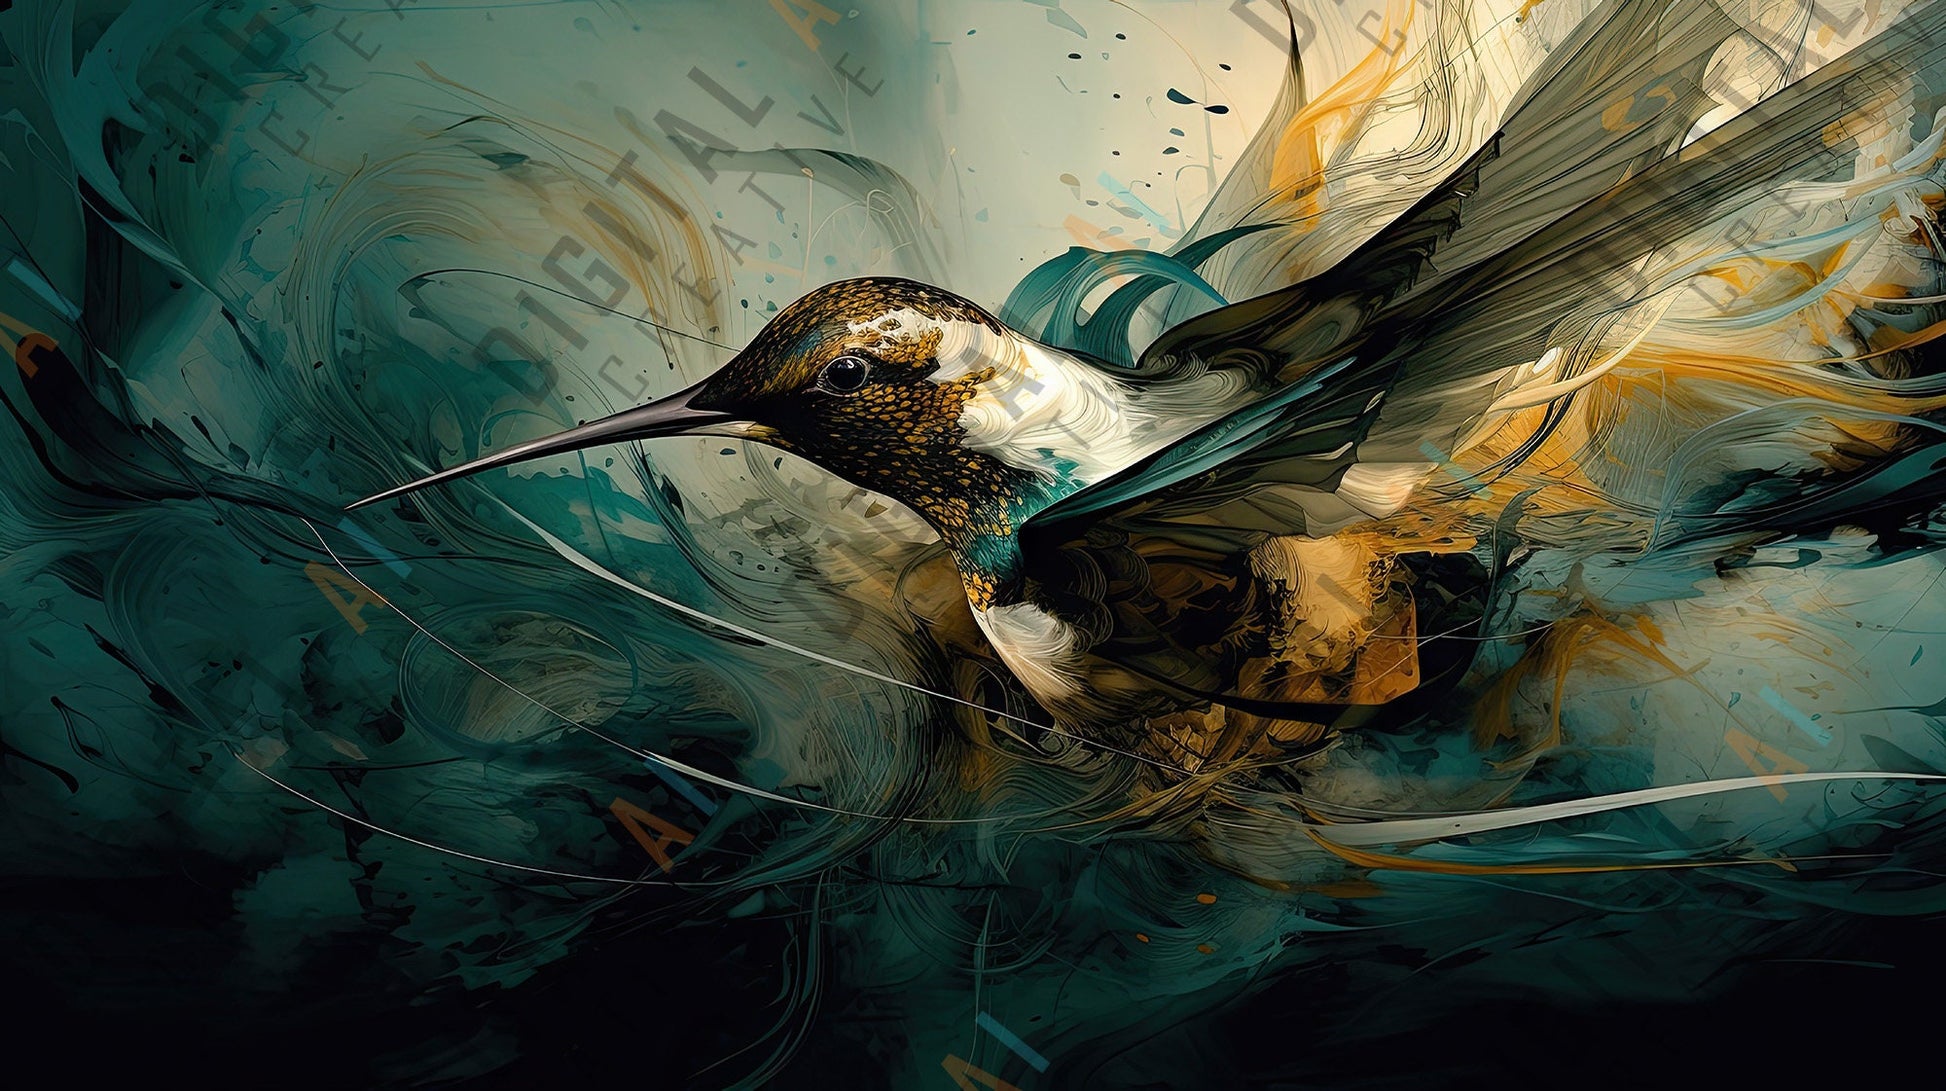 Digital Illustration Package - X5 Birds of Luxe VOL 02  - 8736 x 4896 @300DPI